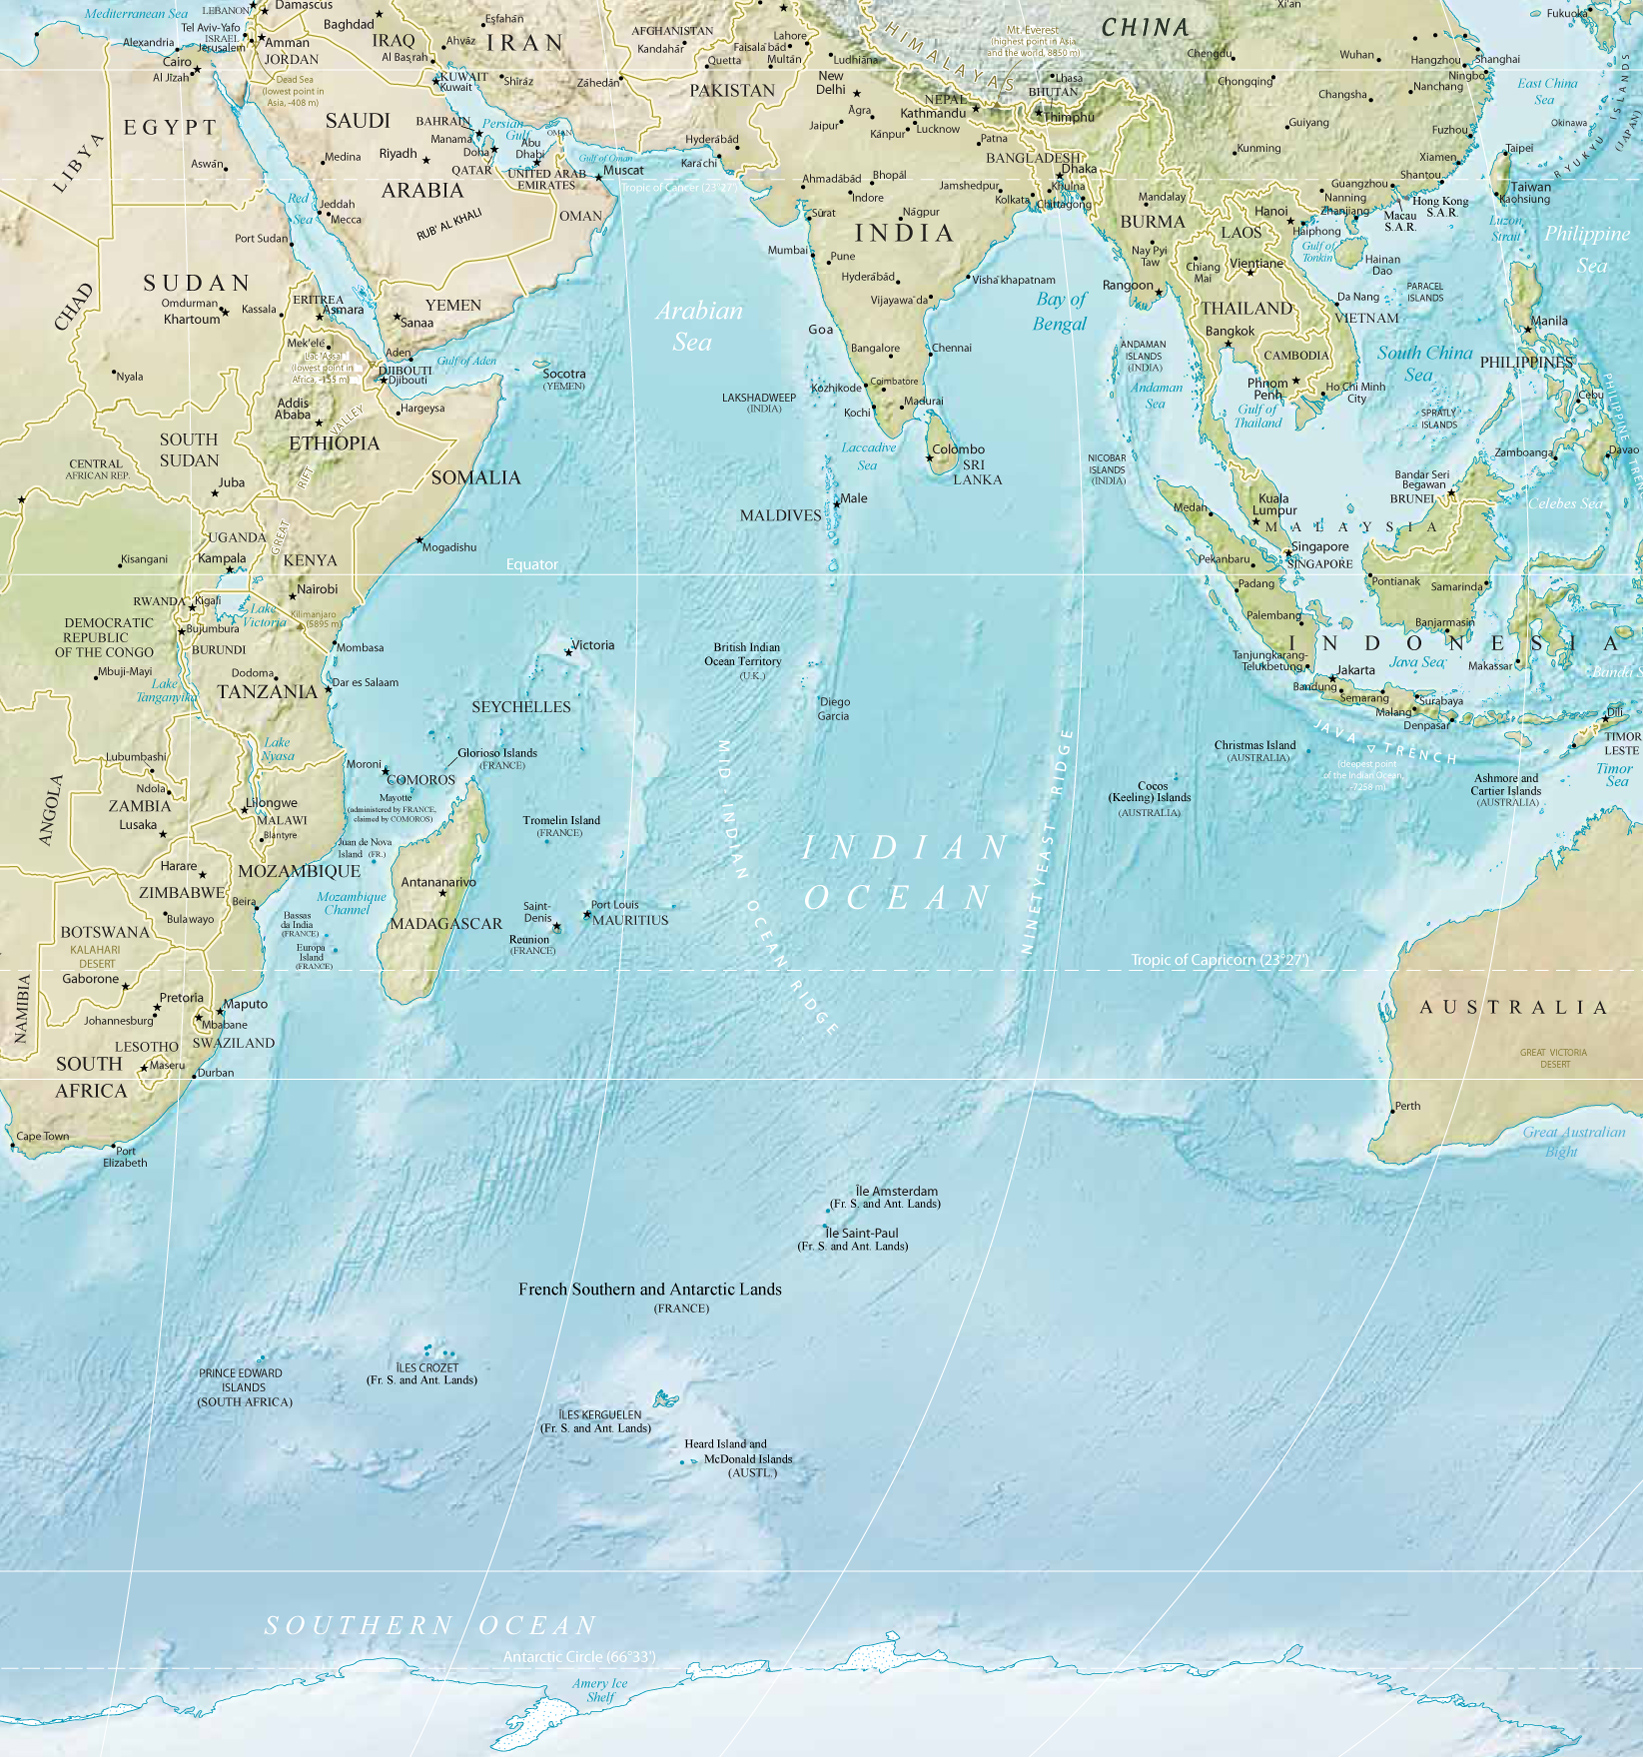 Indian Ocean map